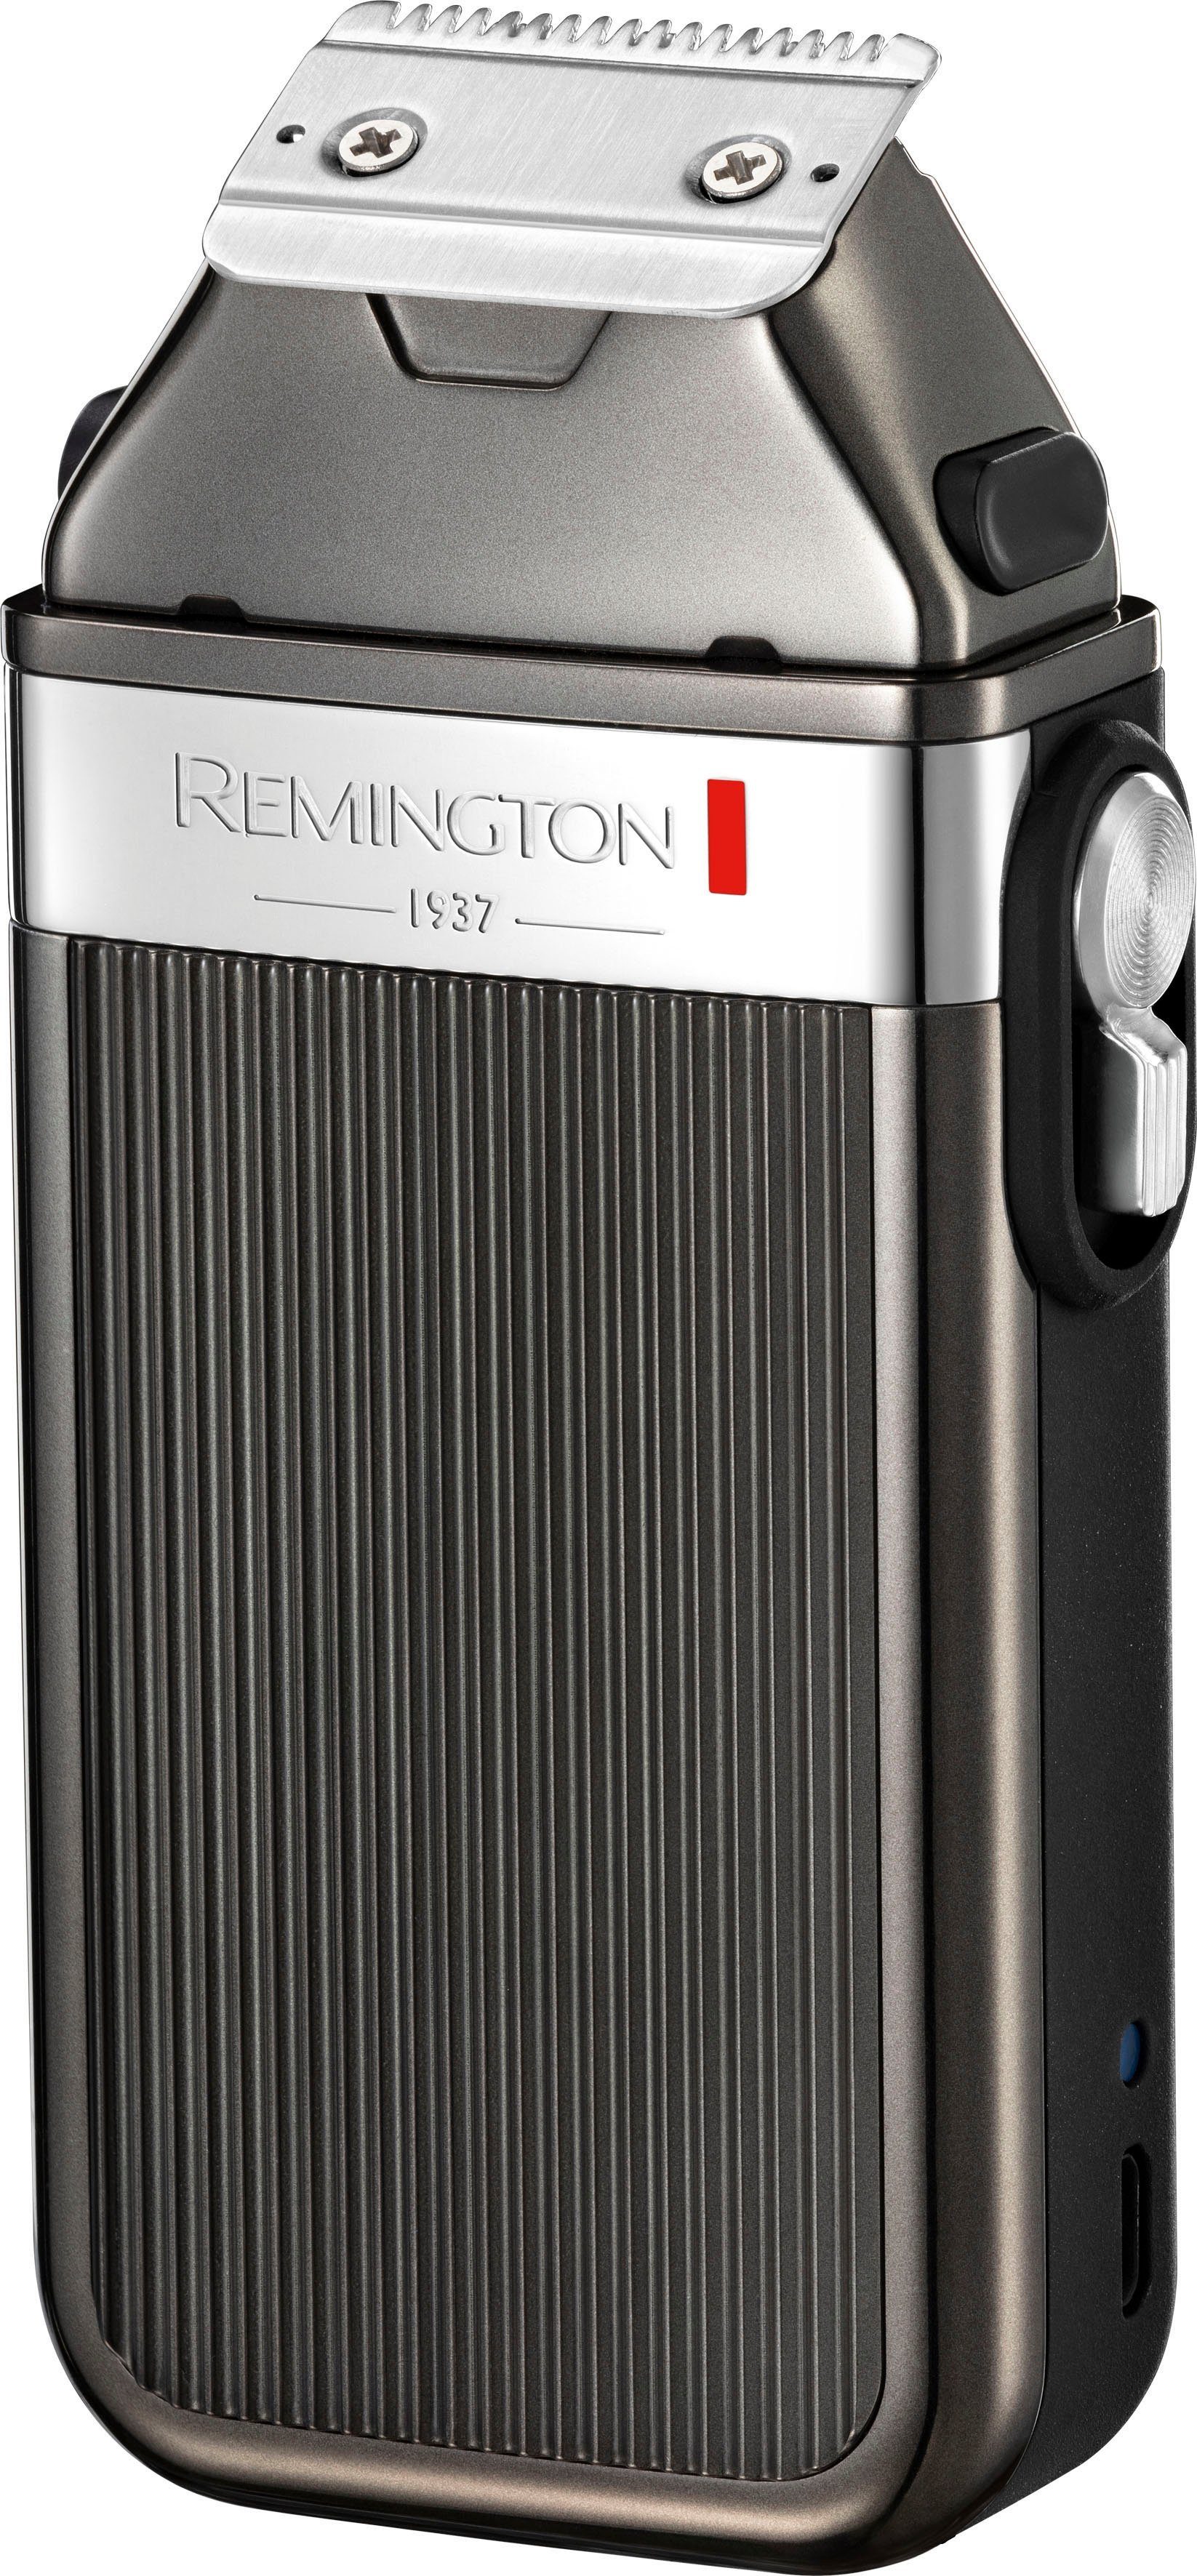 Design MB9100, im Premium Remington Bartschneider Heritage Retro